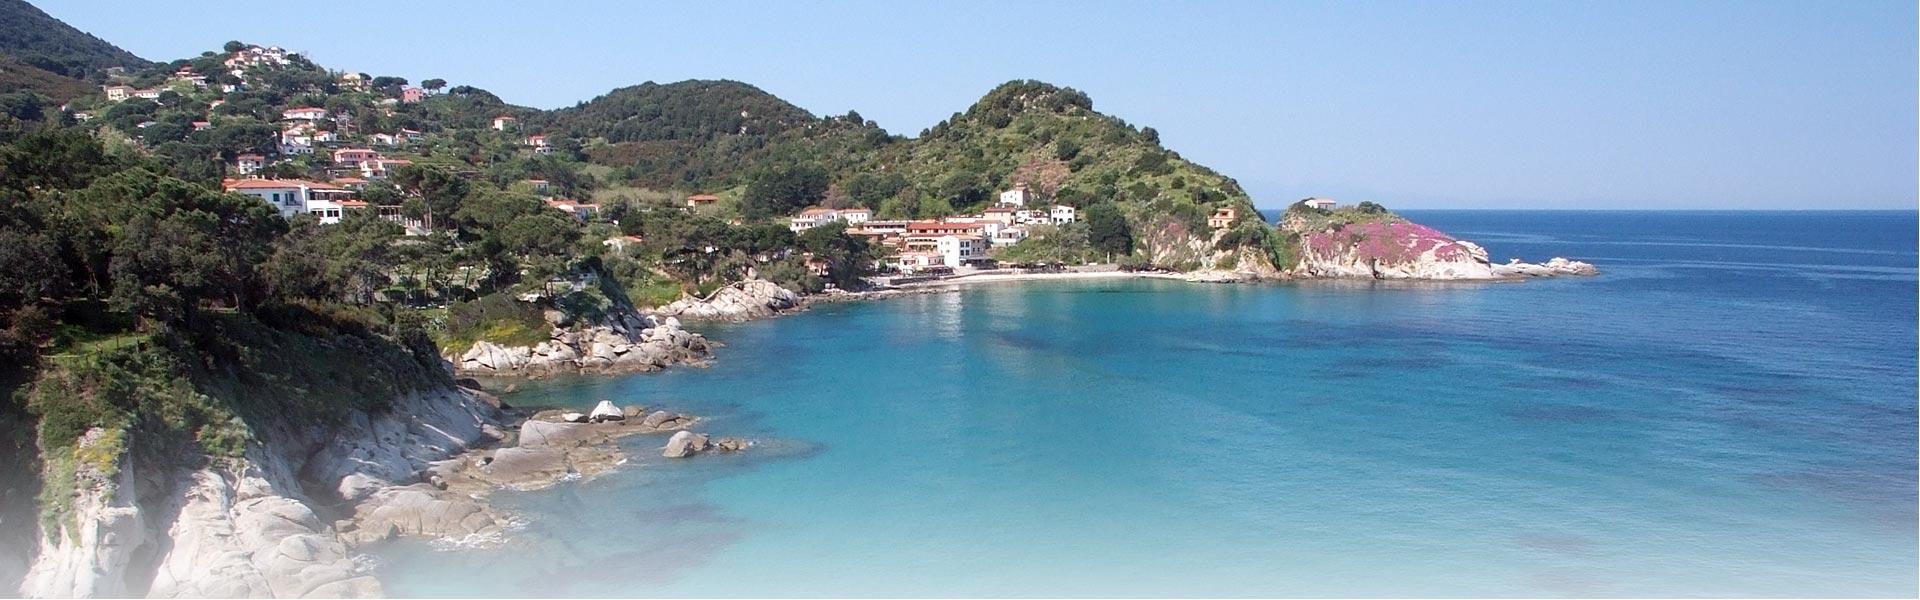 Sant'Andrea, Island of Elba